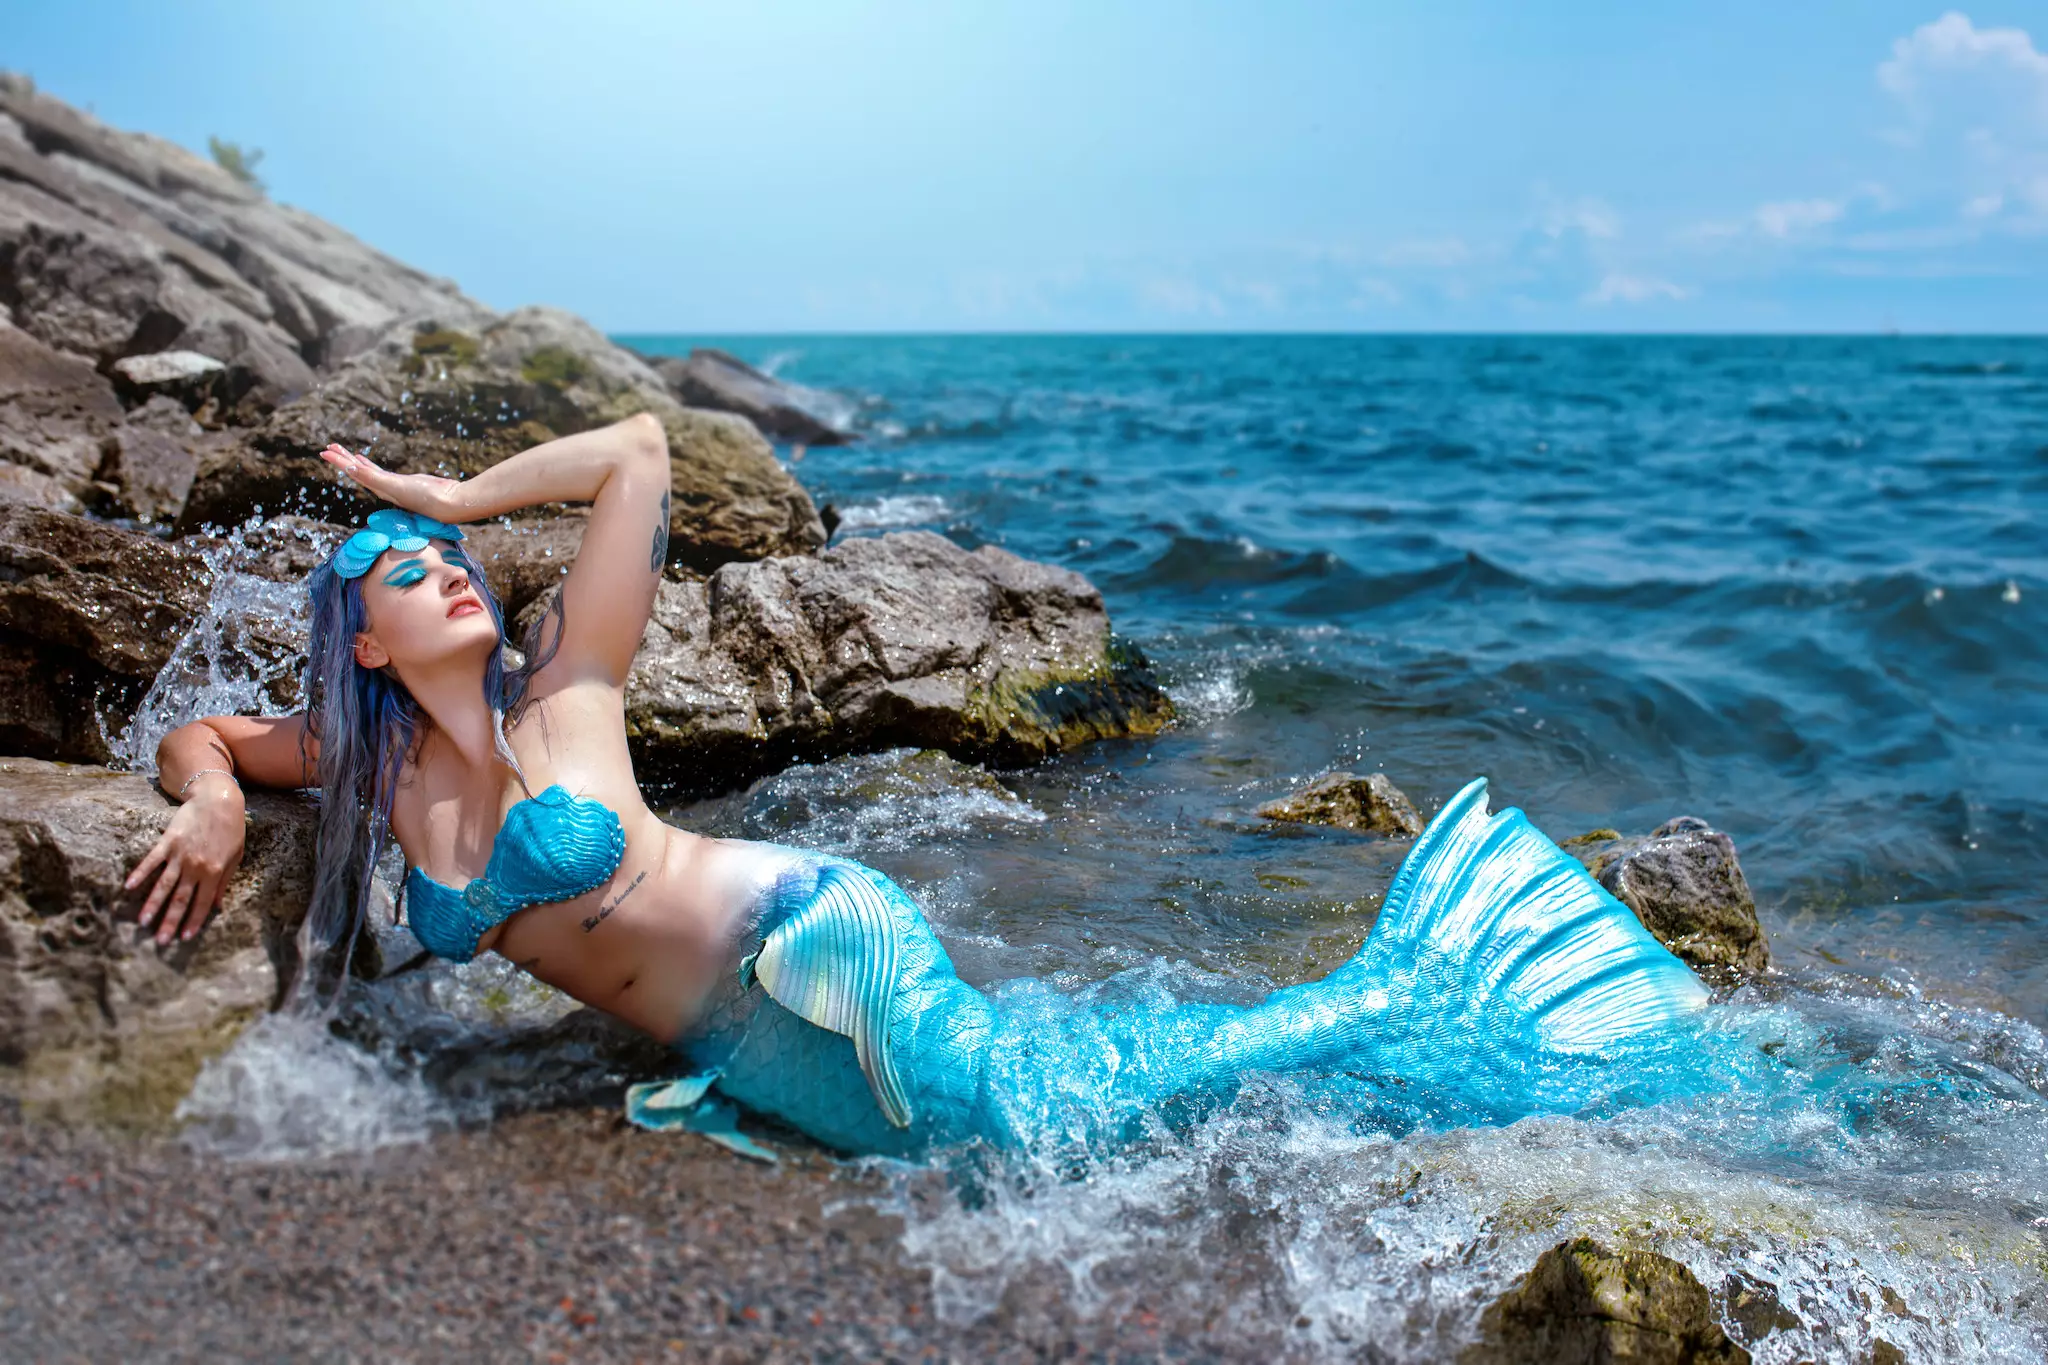 What does a mermaid look like